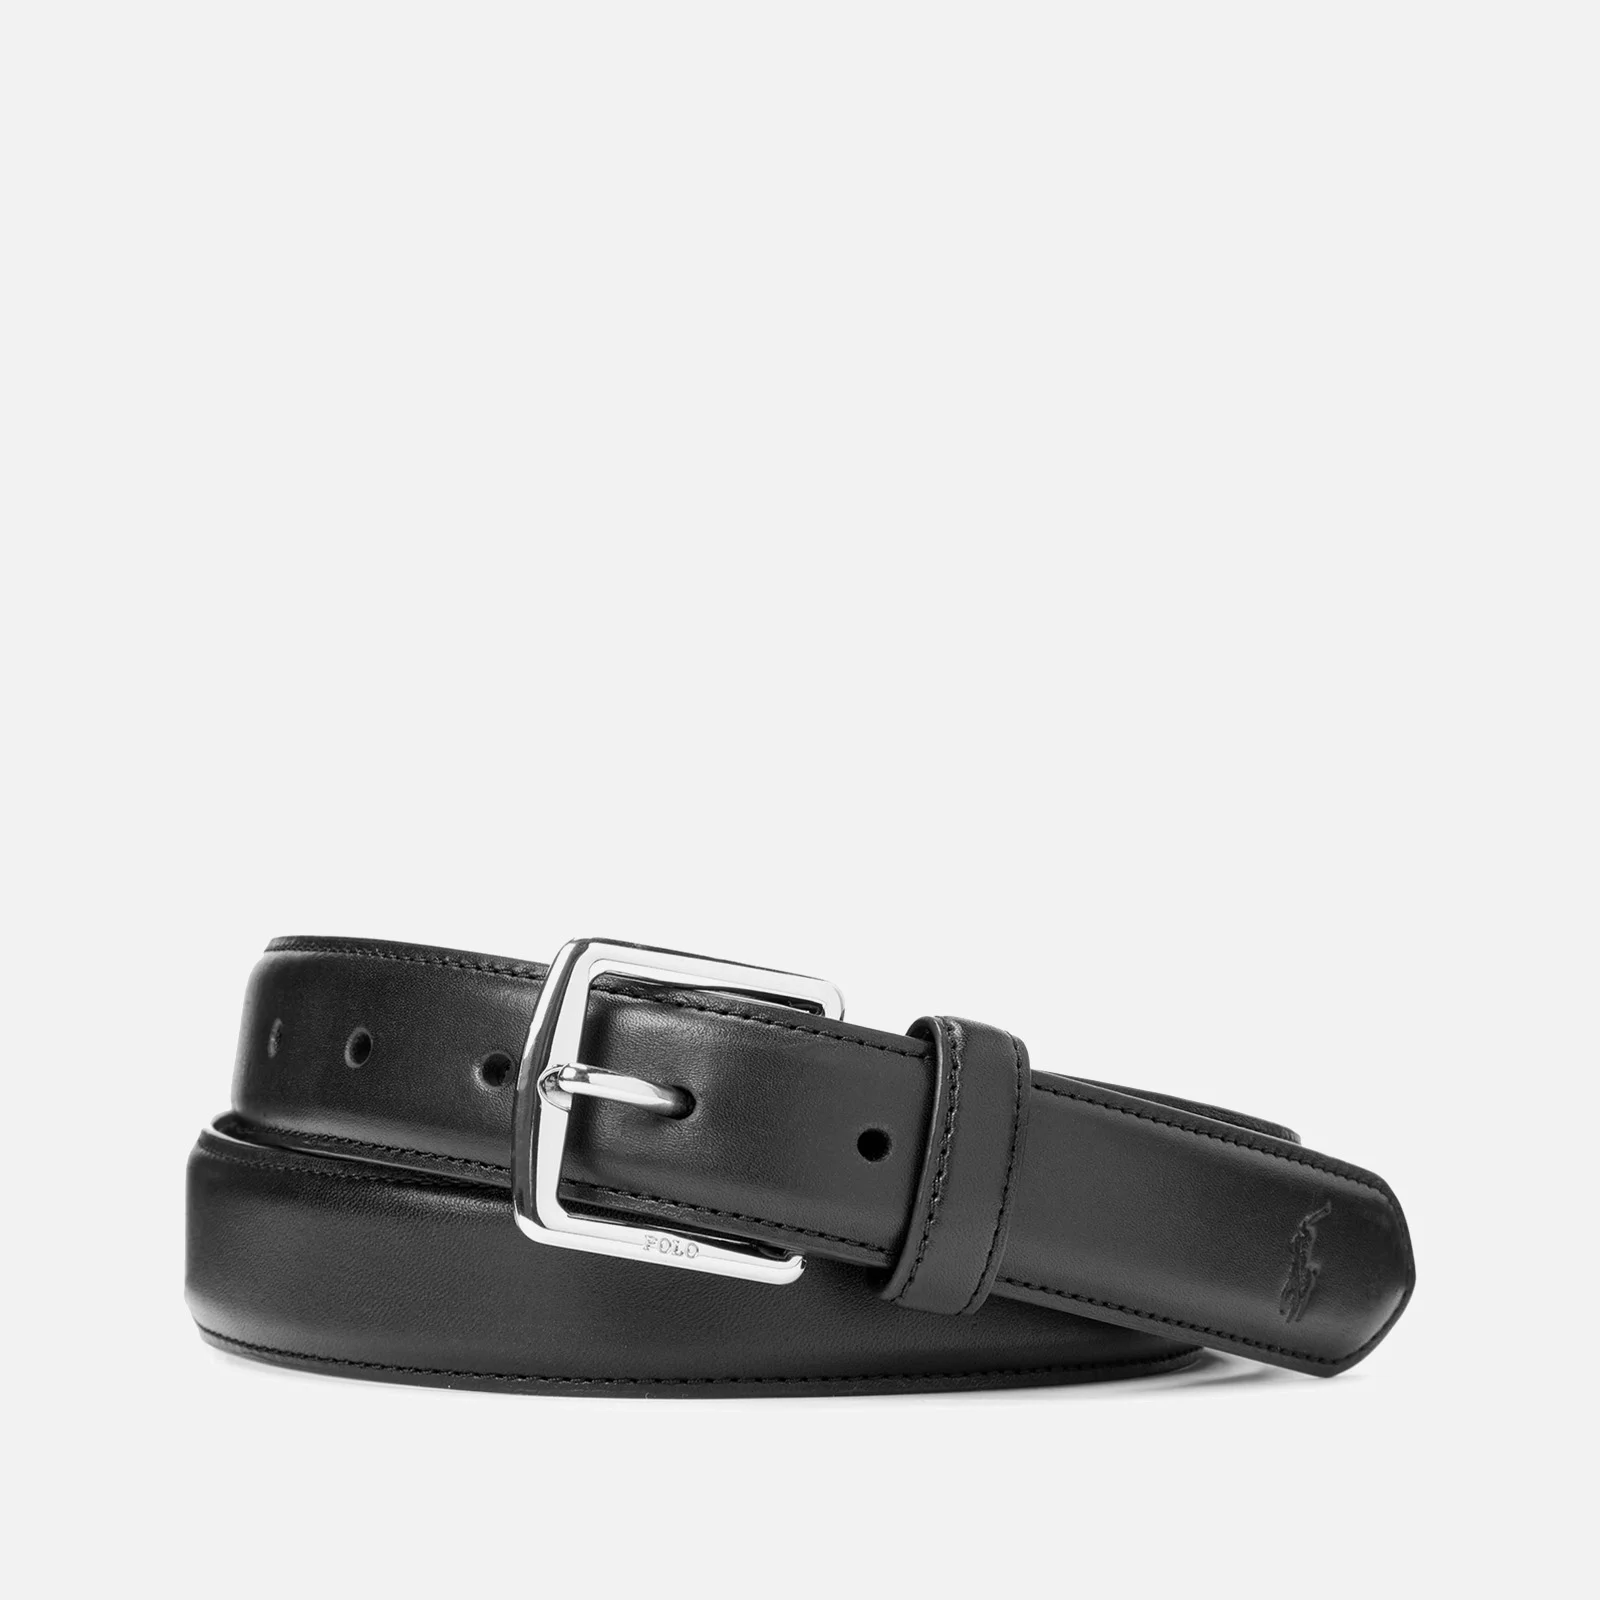 Polo Ralph Lauren Men's Smooth Leather Embossed Foil Logo Belt - Black Image 1